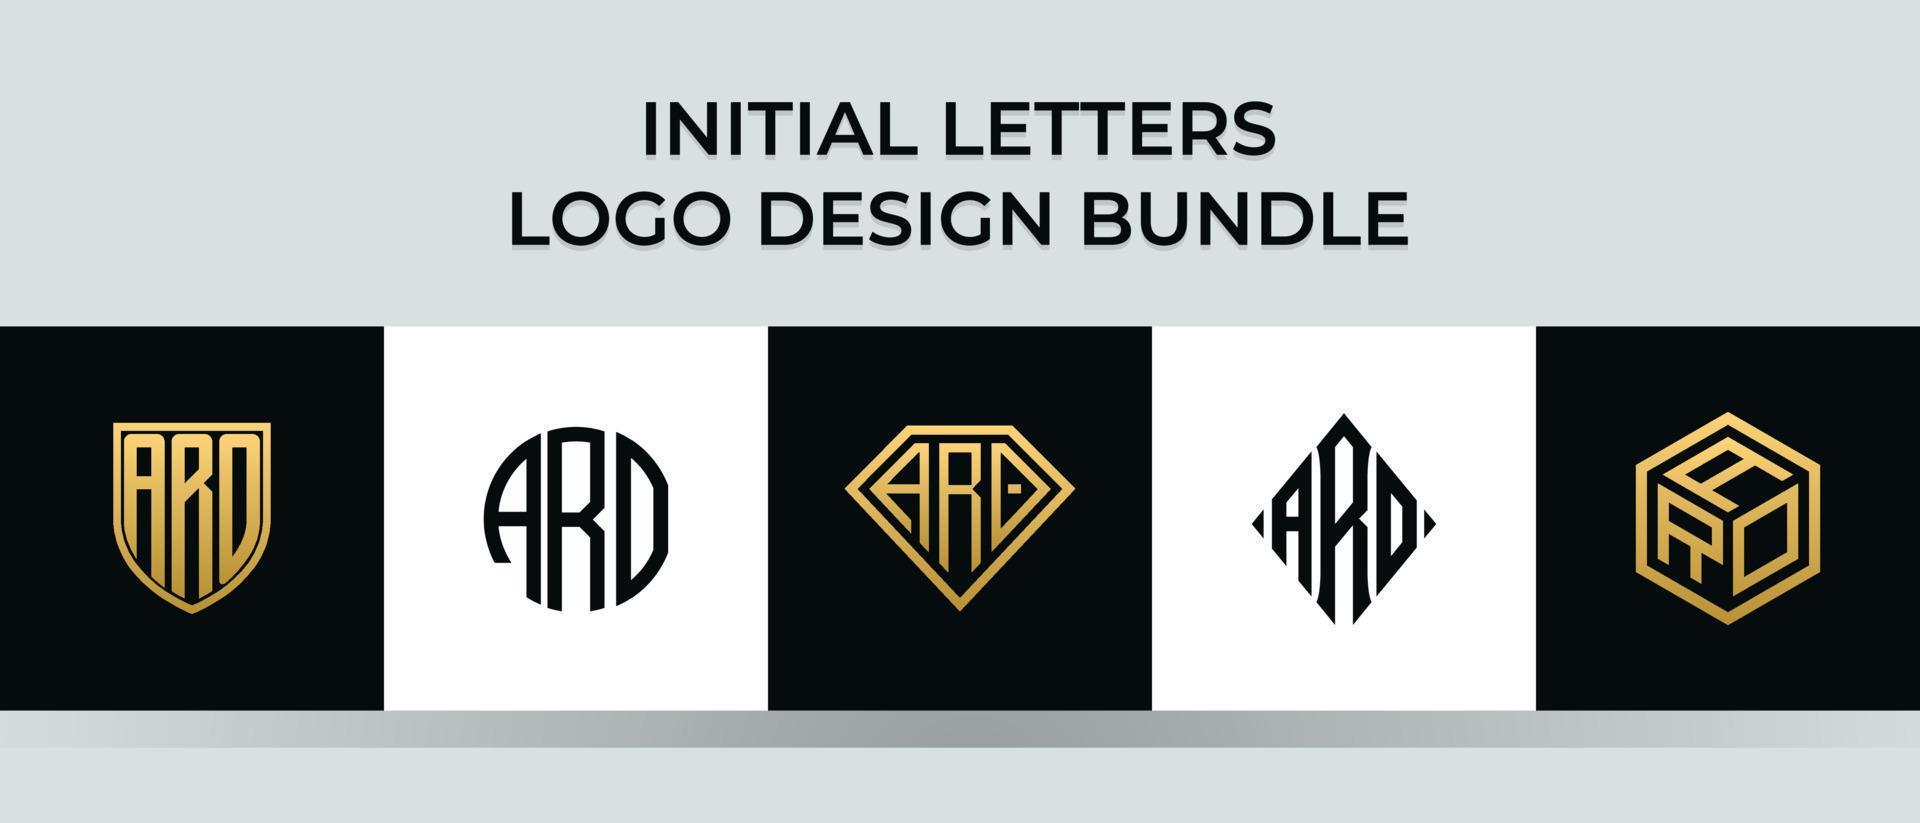 Initial letters ARO logo designs Bundle vector